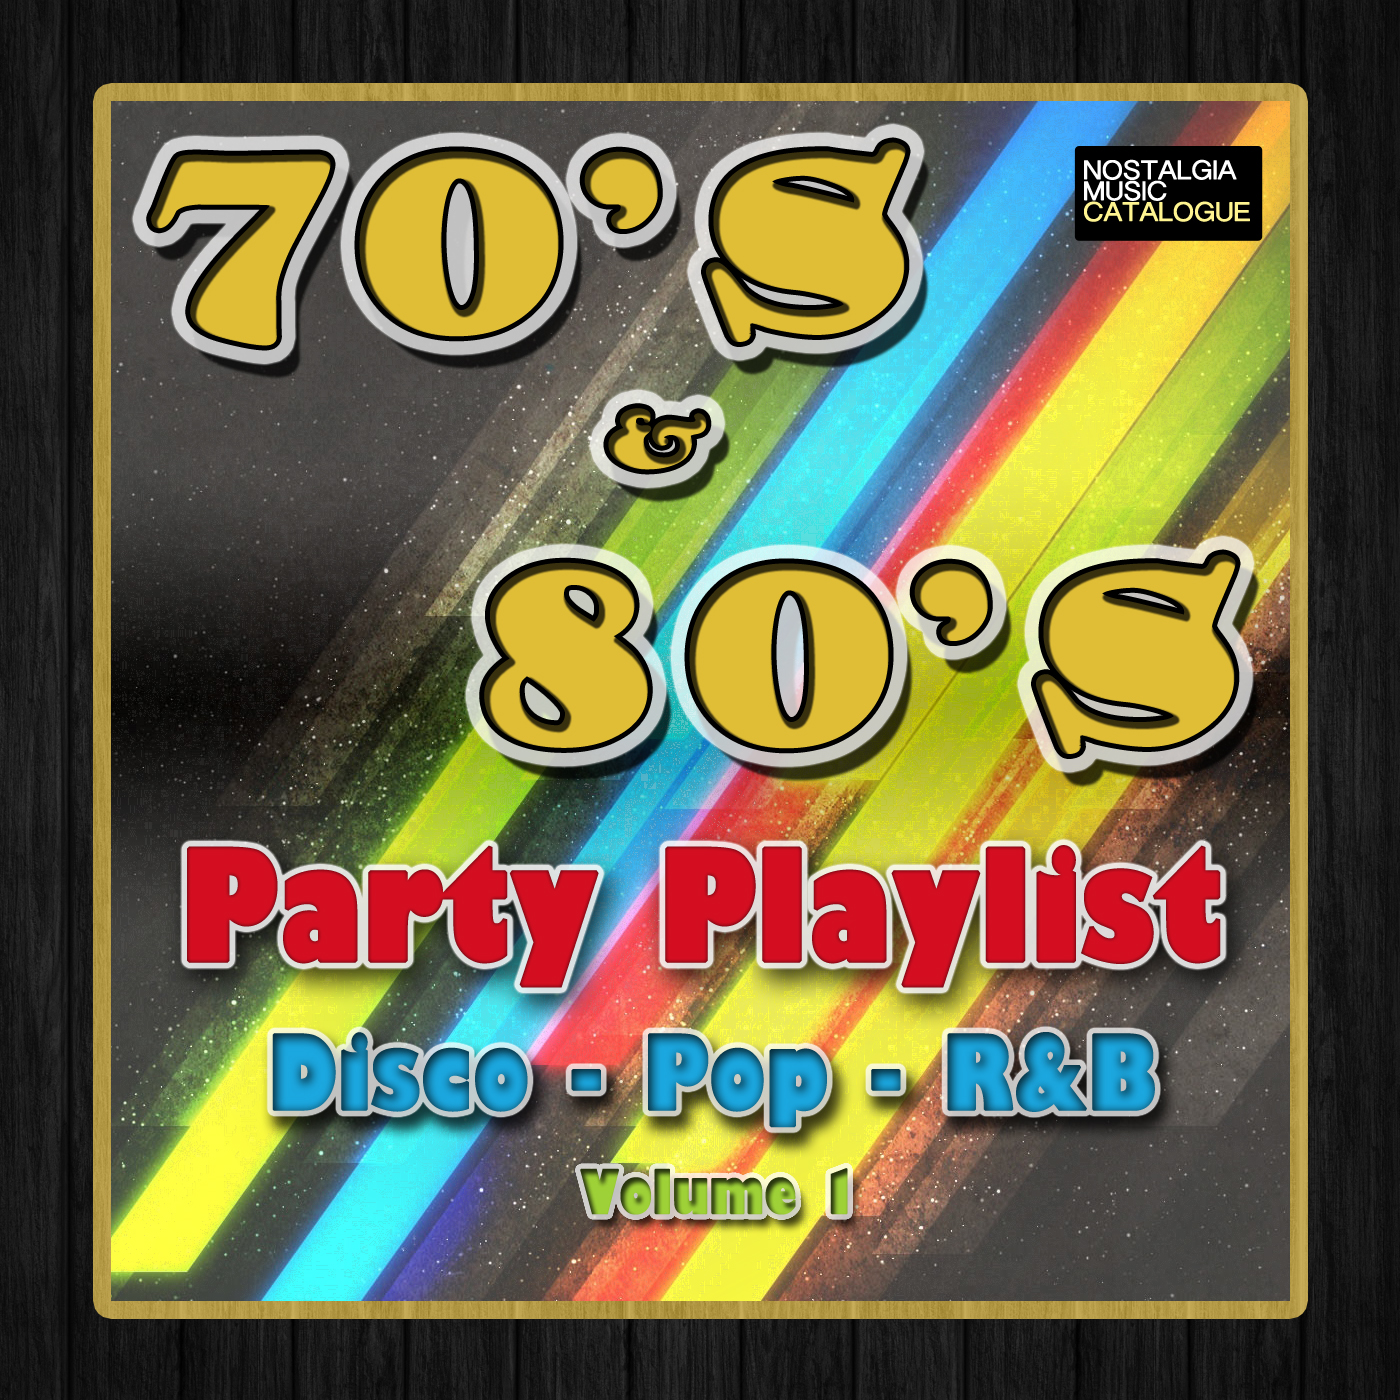 Geavanceerd beklimmen produceren 70's & 80's Party Playlist - Volume 1 (Disco - Pop - R&B) - Nostalgia Music  Catalogue